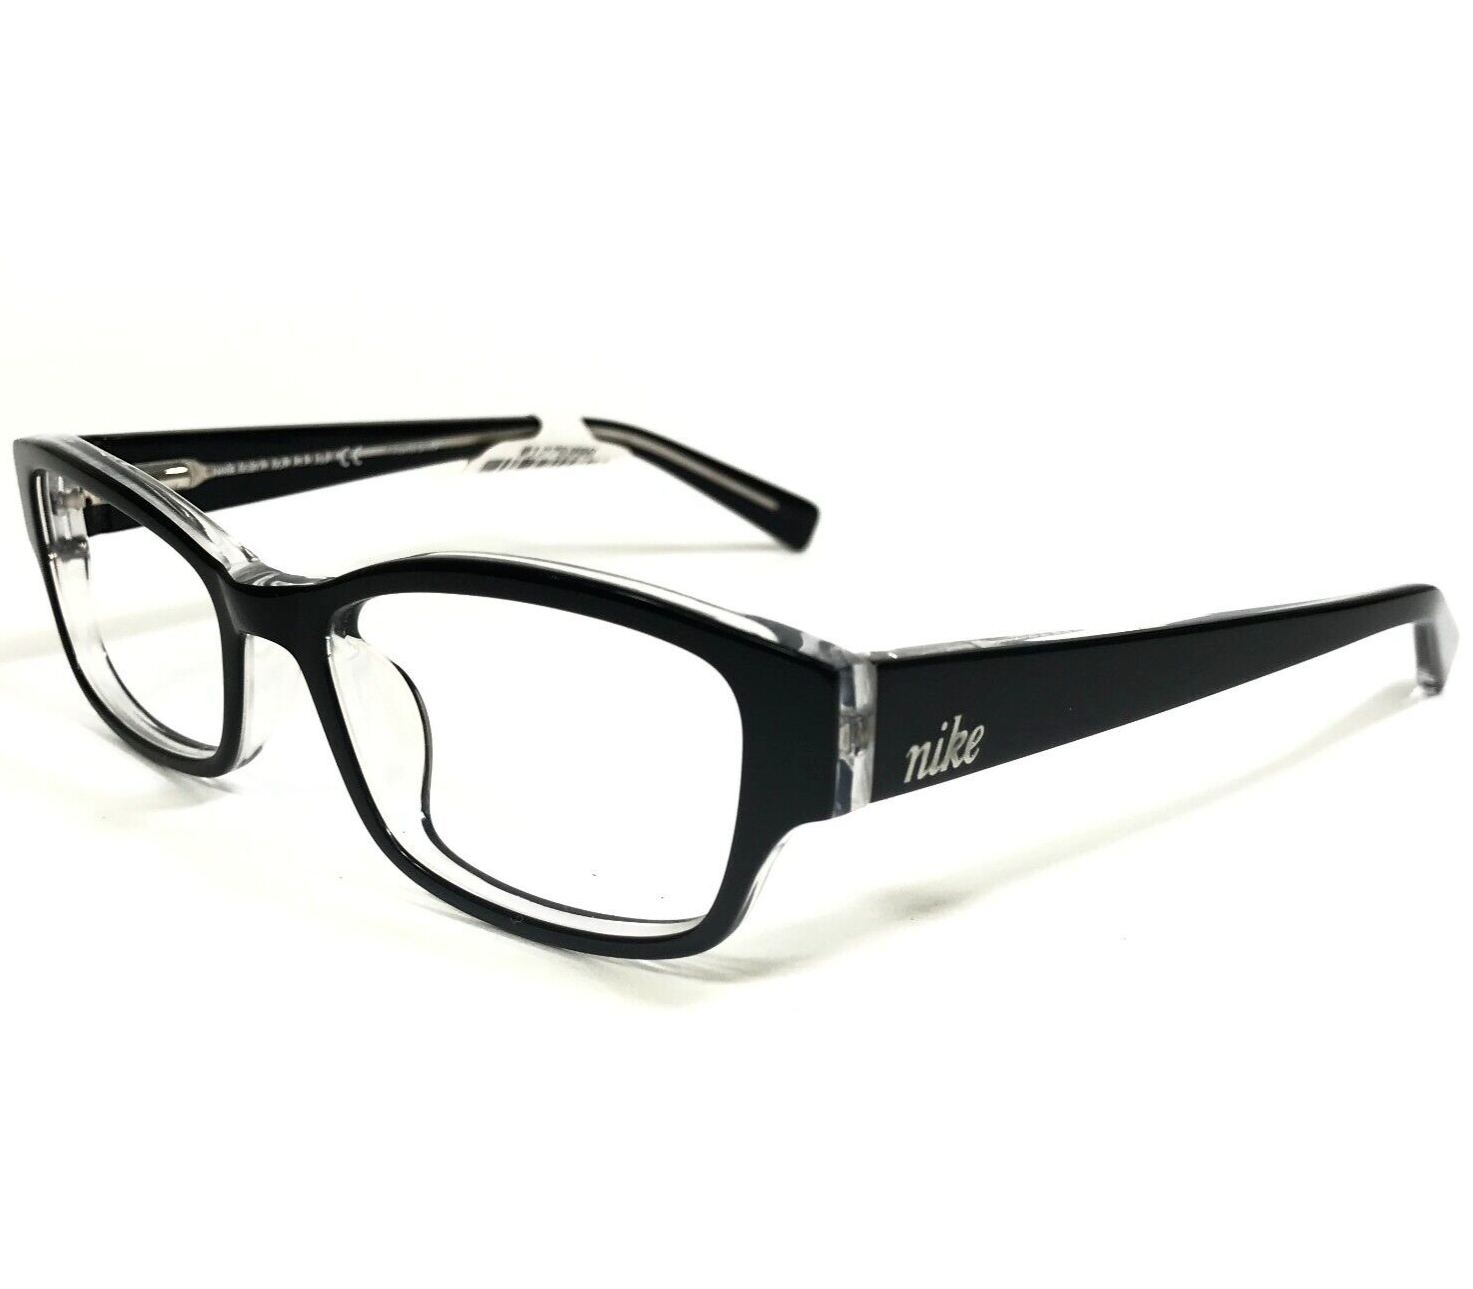 Primary image for Nike Kids Eyeglasses Frames 5527 001 Black Clear Rectangular Thick Rim 46-15-130